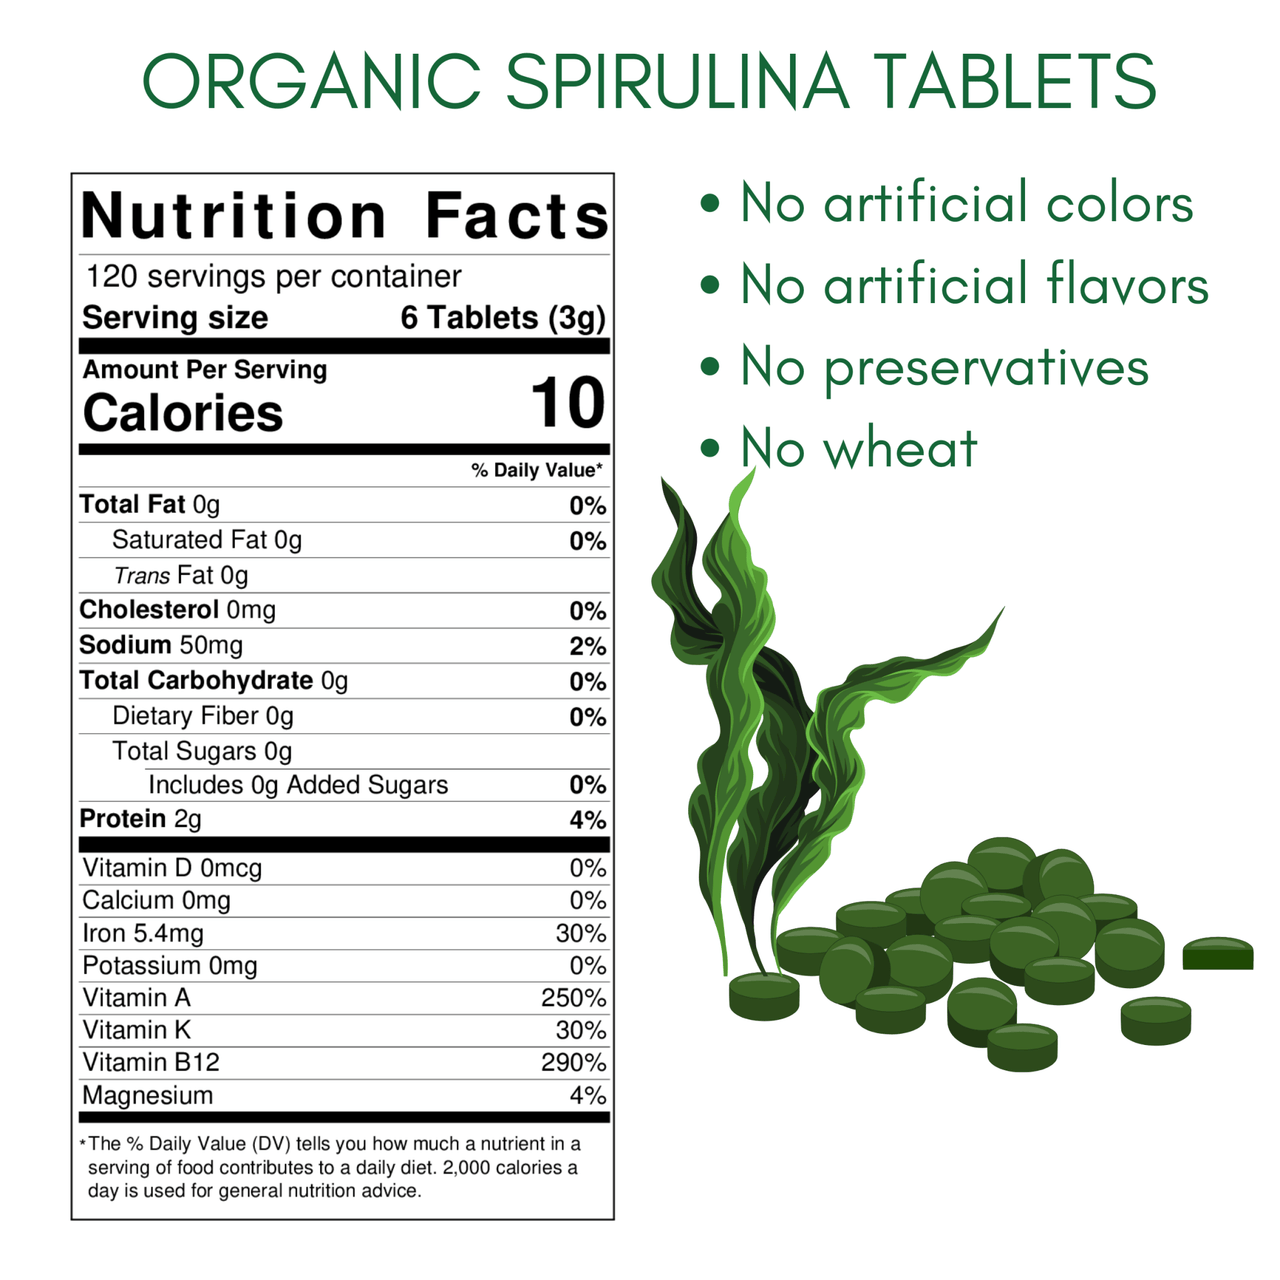 Organic Spirulina Supplement, 3000MG Per Serving, (4 Month Supply) - Probase Nutrition